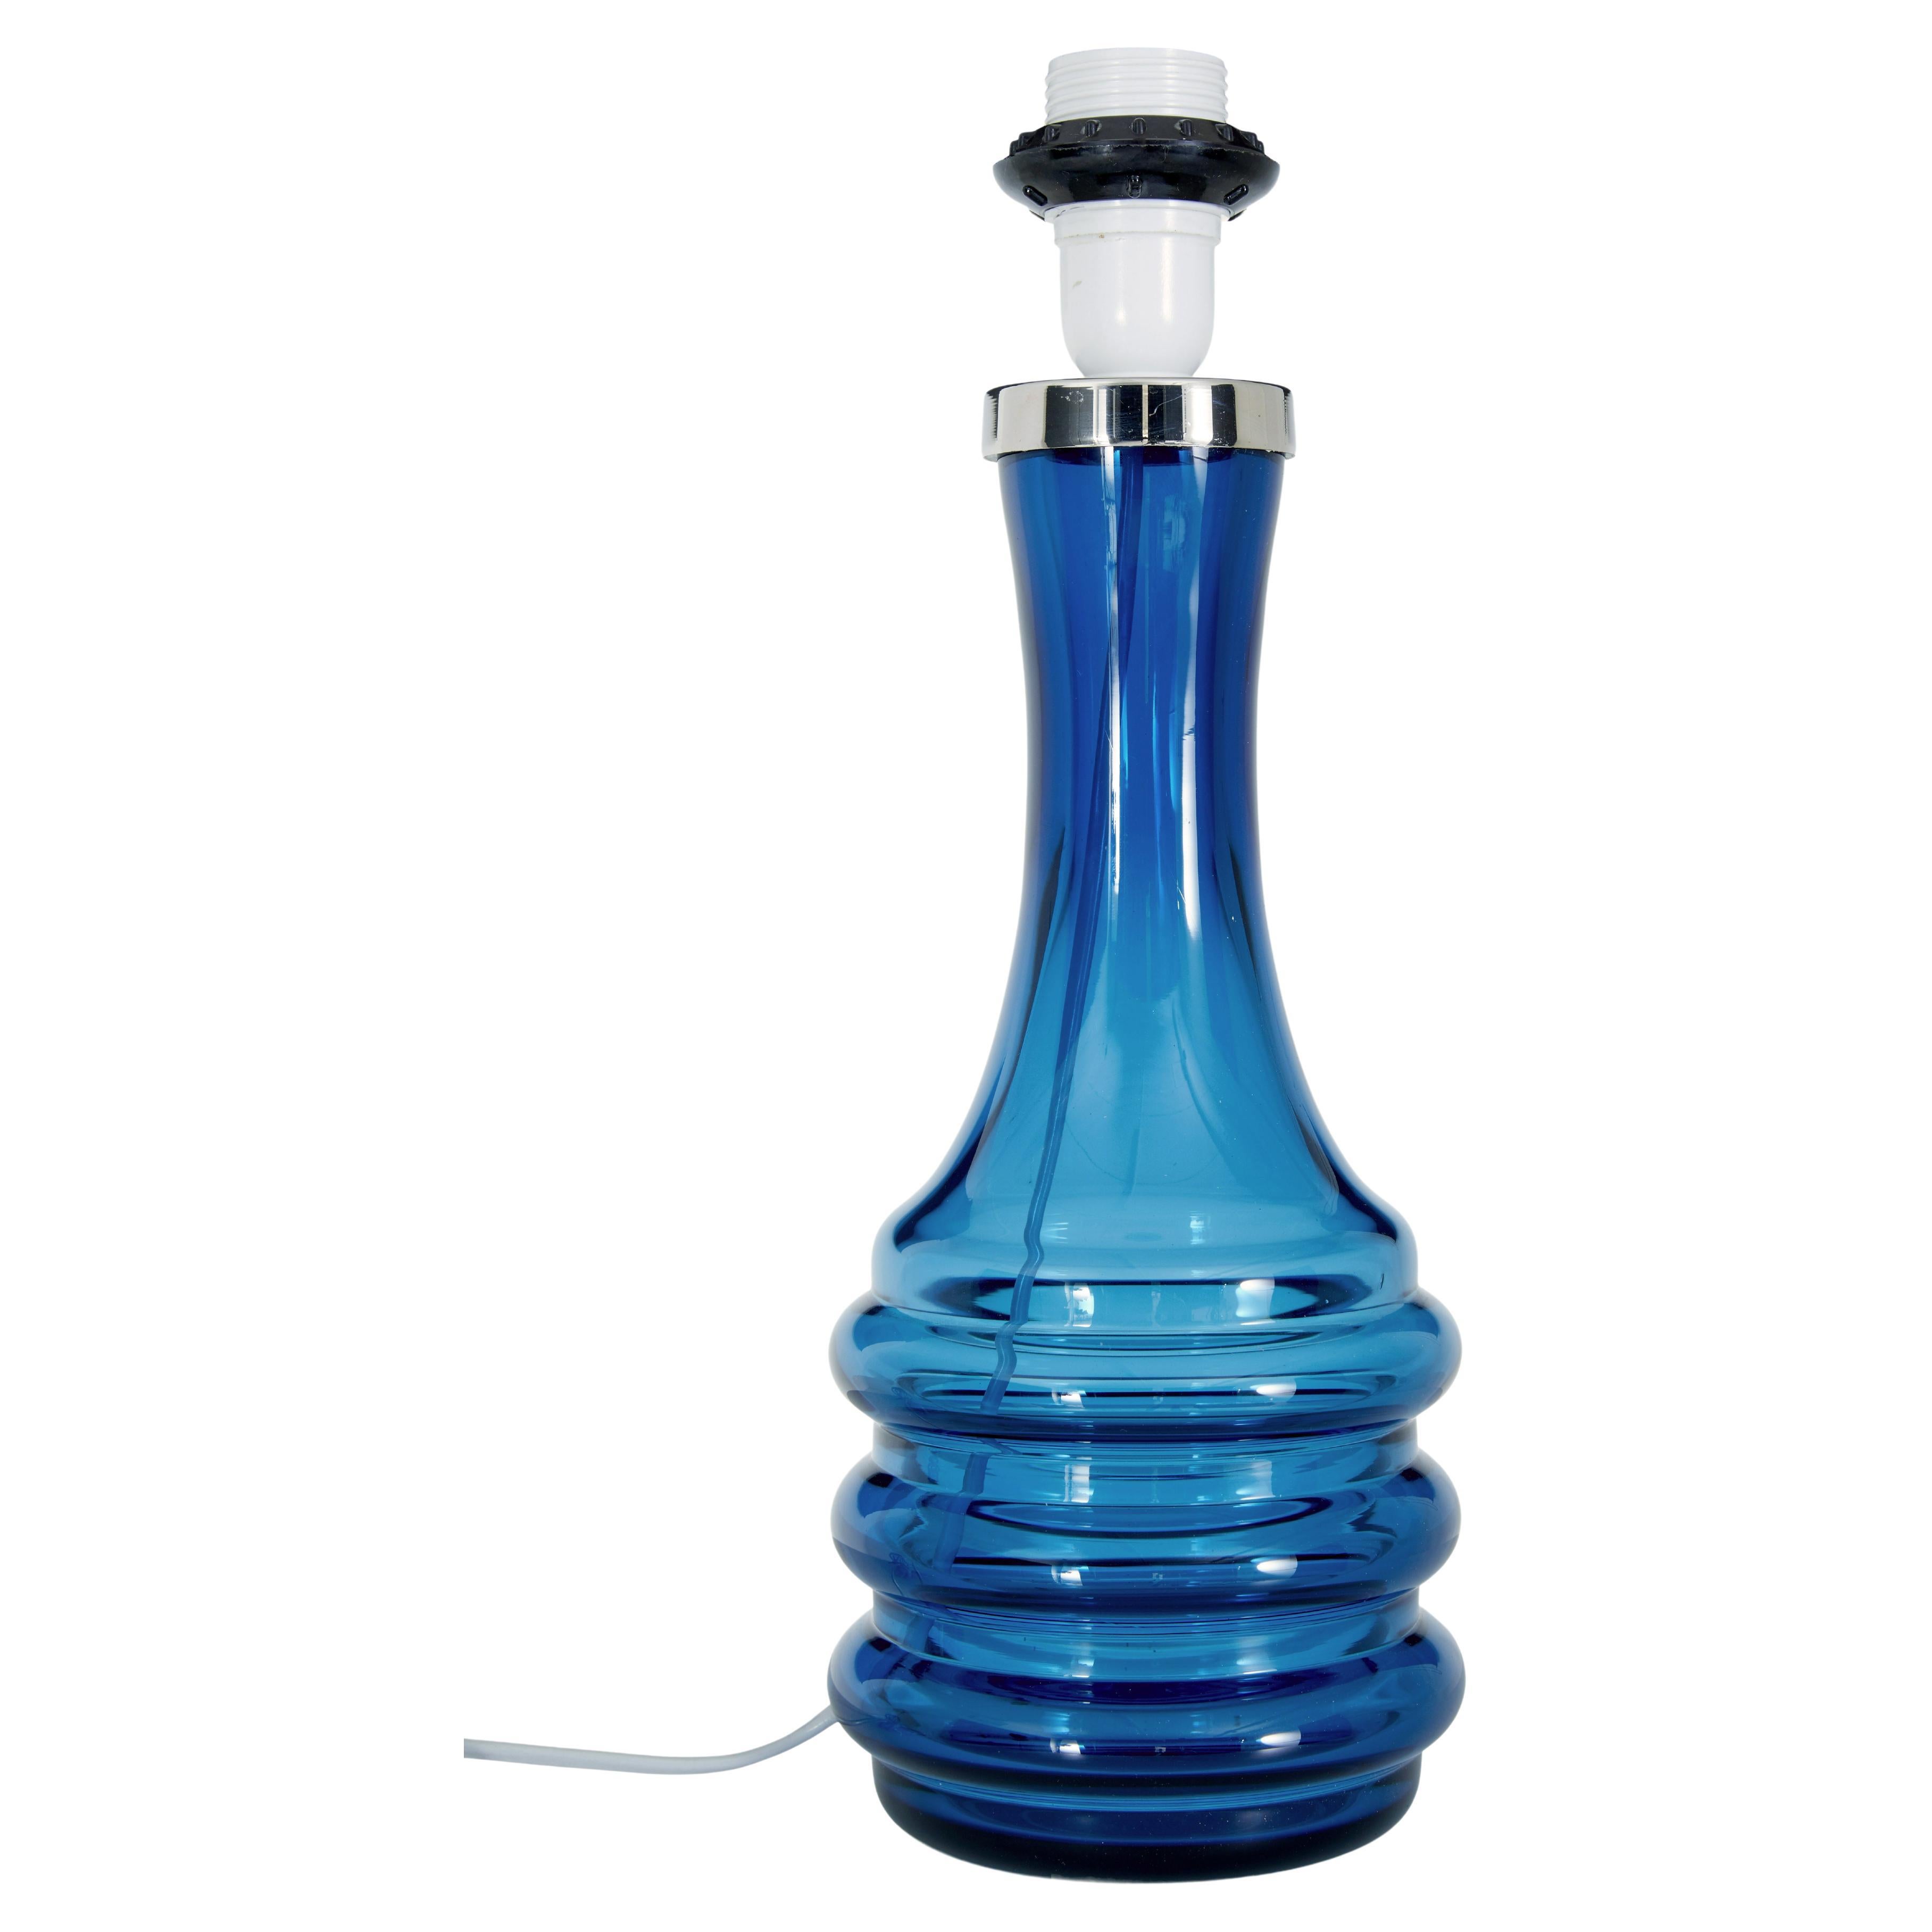 Orrefors-Lampe aus farbigem Glas des 20. Jahrhunderts